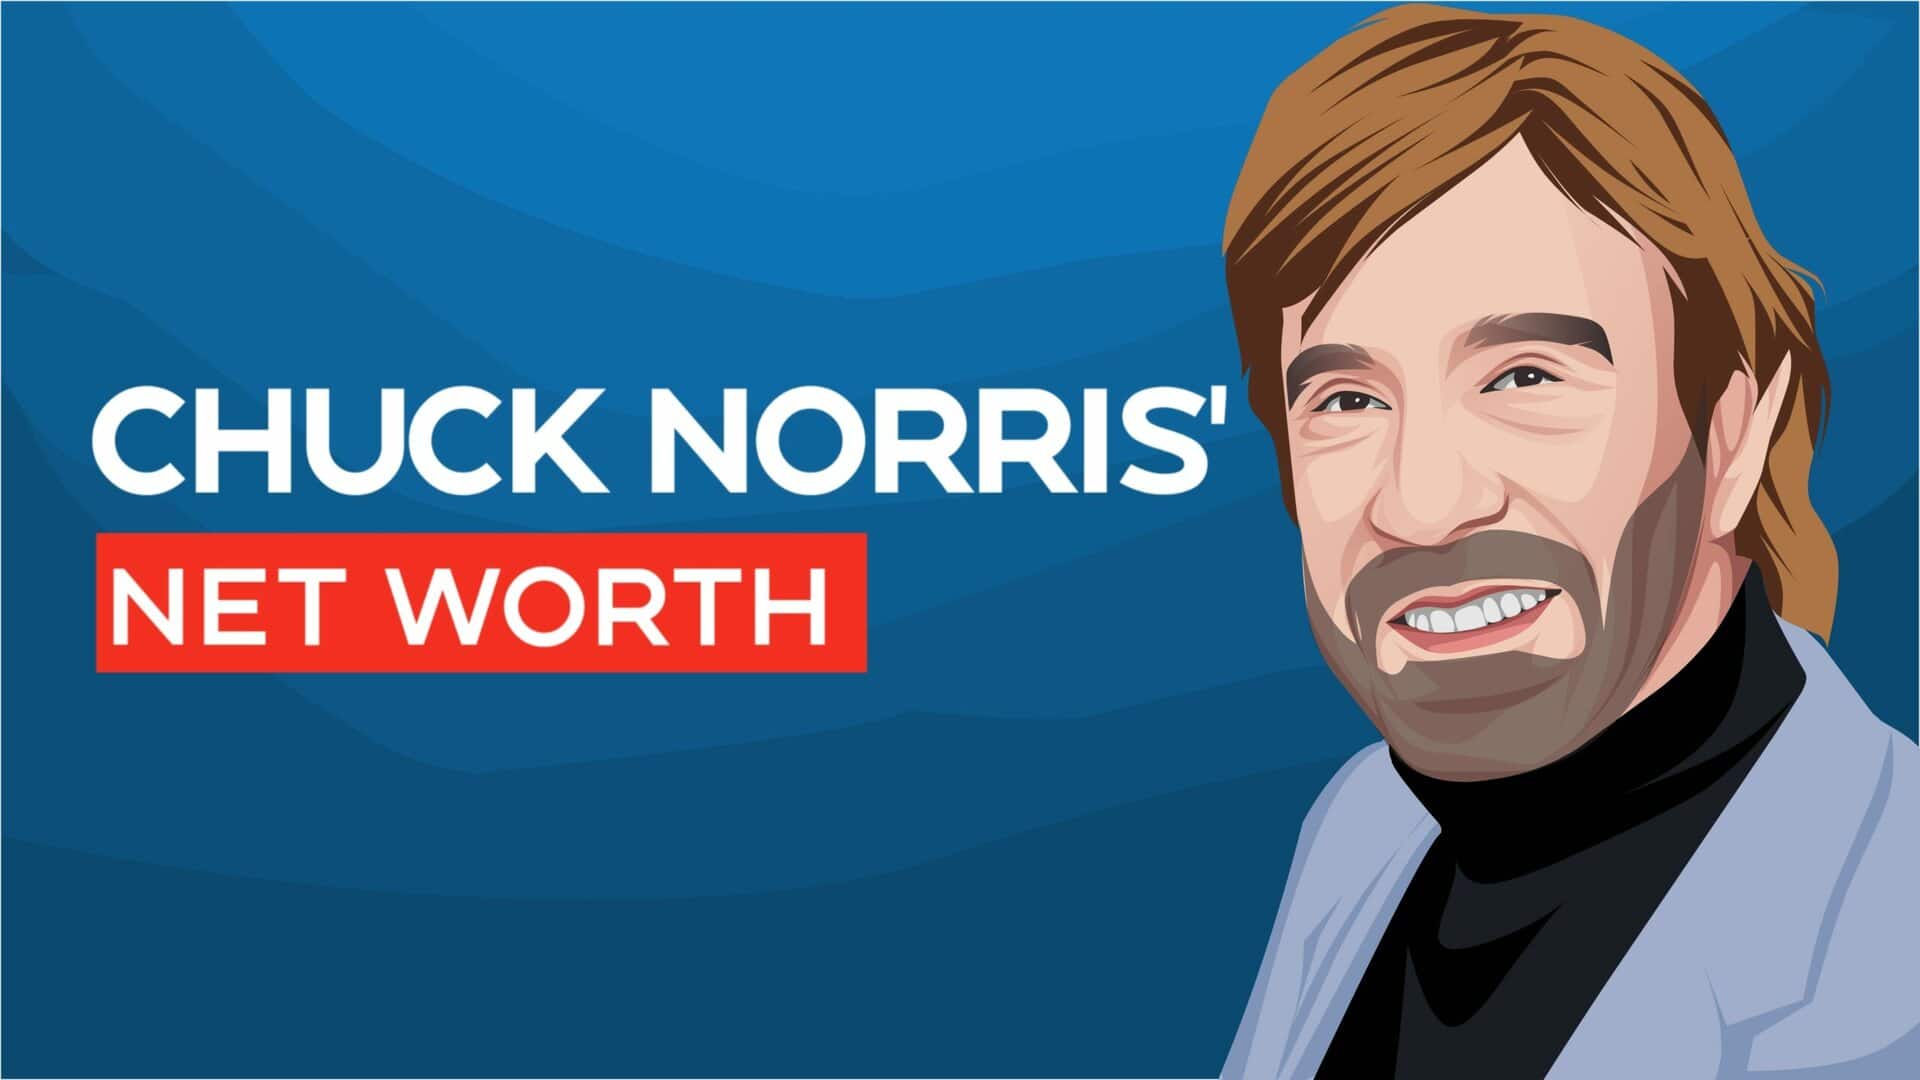 Chuck Norris net worth